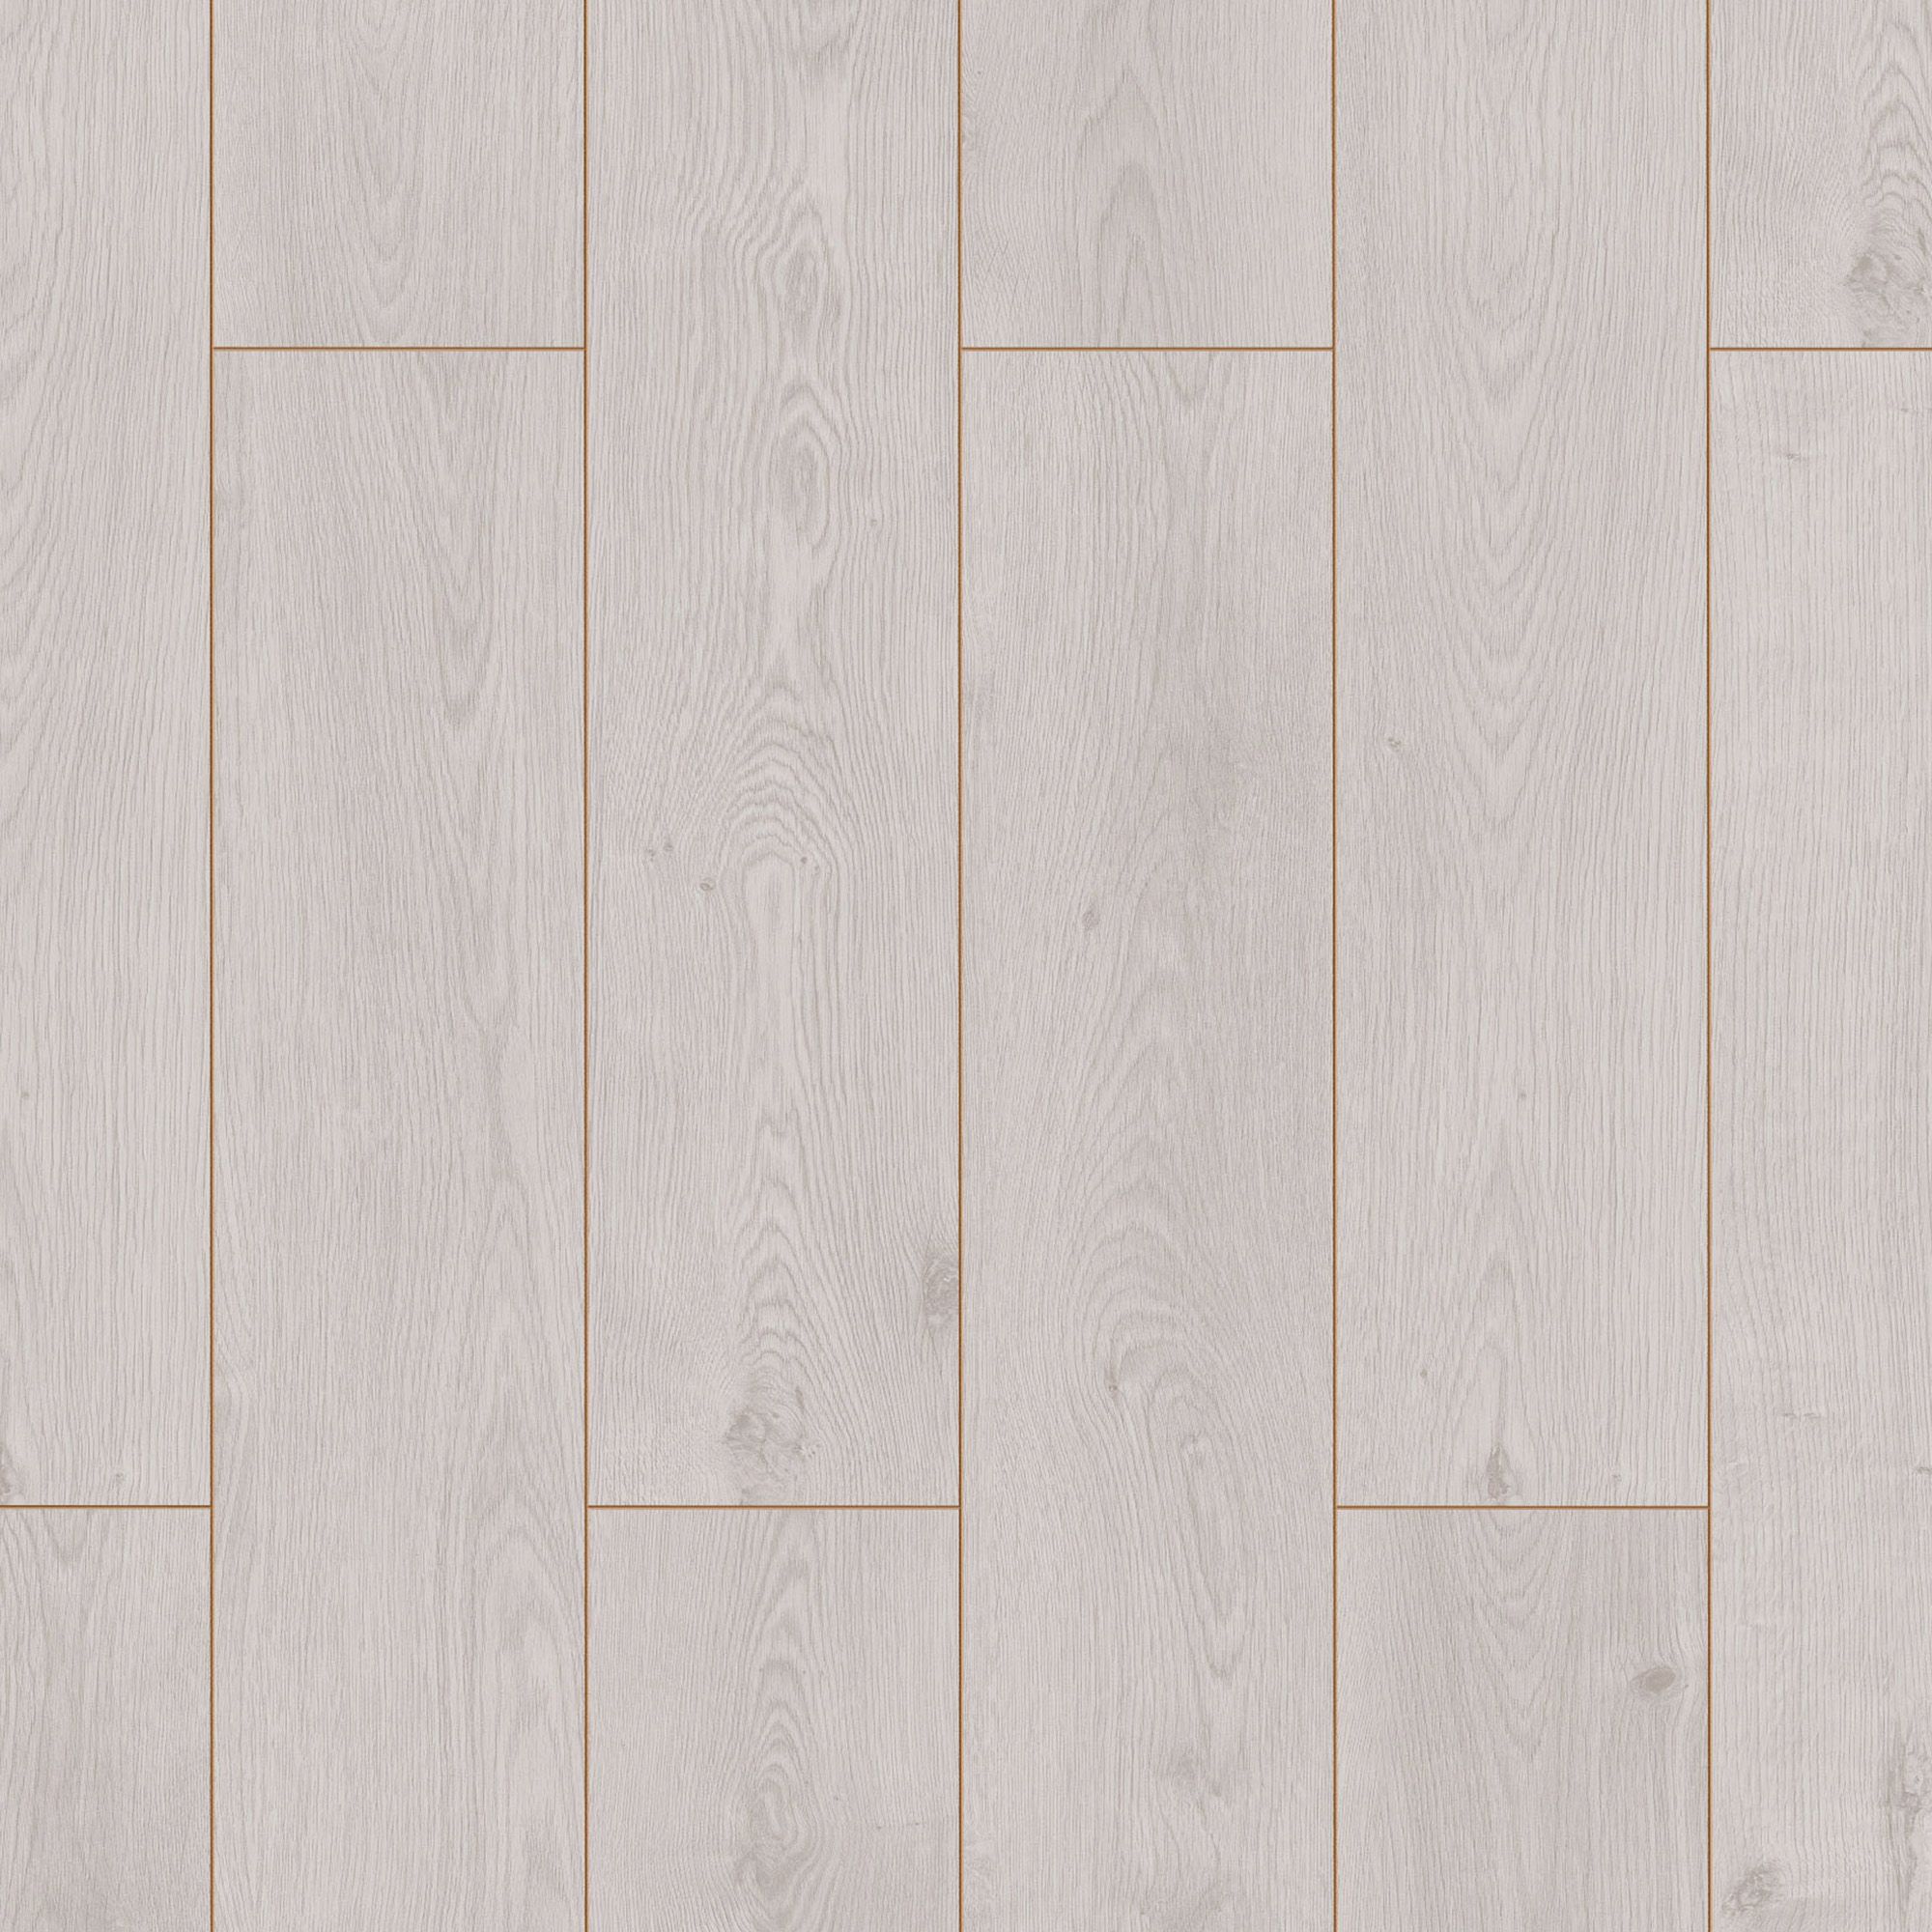 Overture Arlington White Oak Effect Laminate Flooring 1.25 m² Sample Departments DIY at B&Q